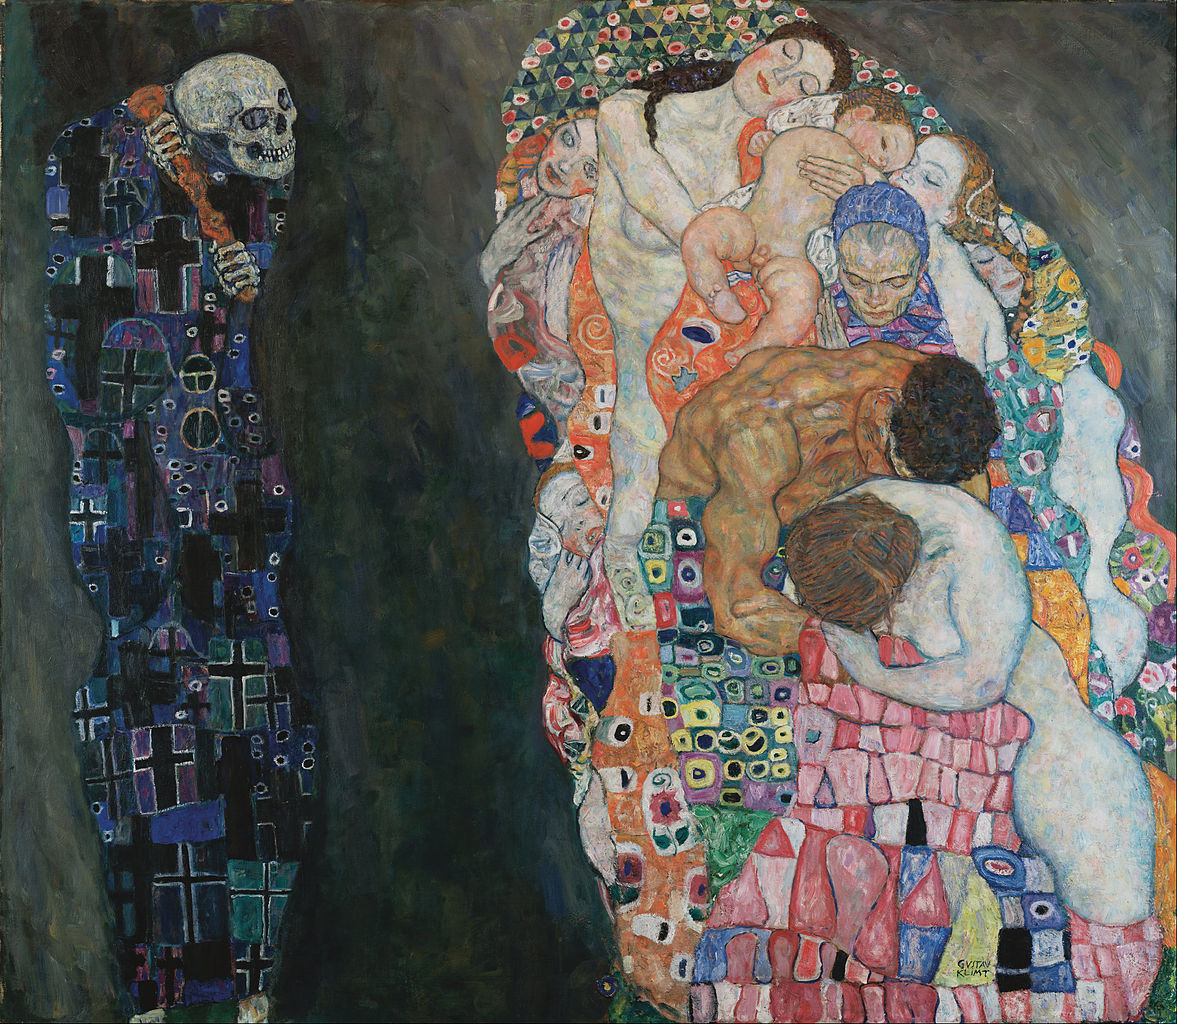 http://upload.wikimedia.org/wikipedia/commons/thumb/1/18/Gustav_Klimt_-_Death_and_Life_-_Google_Art_Project.jpg/1177px-Gustav_Klimt_-_Death_and_Life_-_Google_Art_Project.jpg